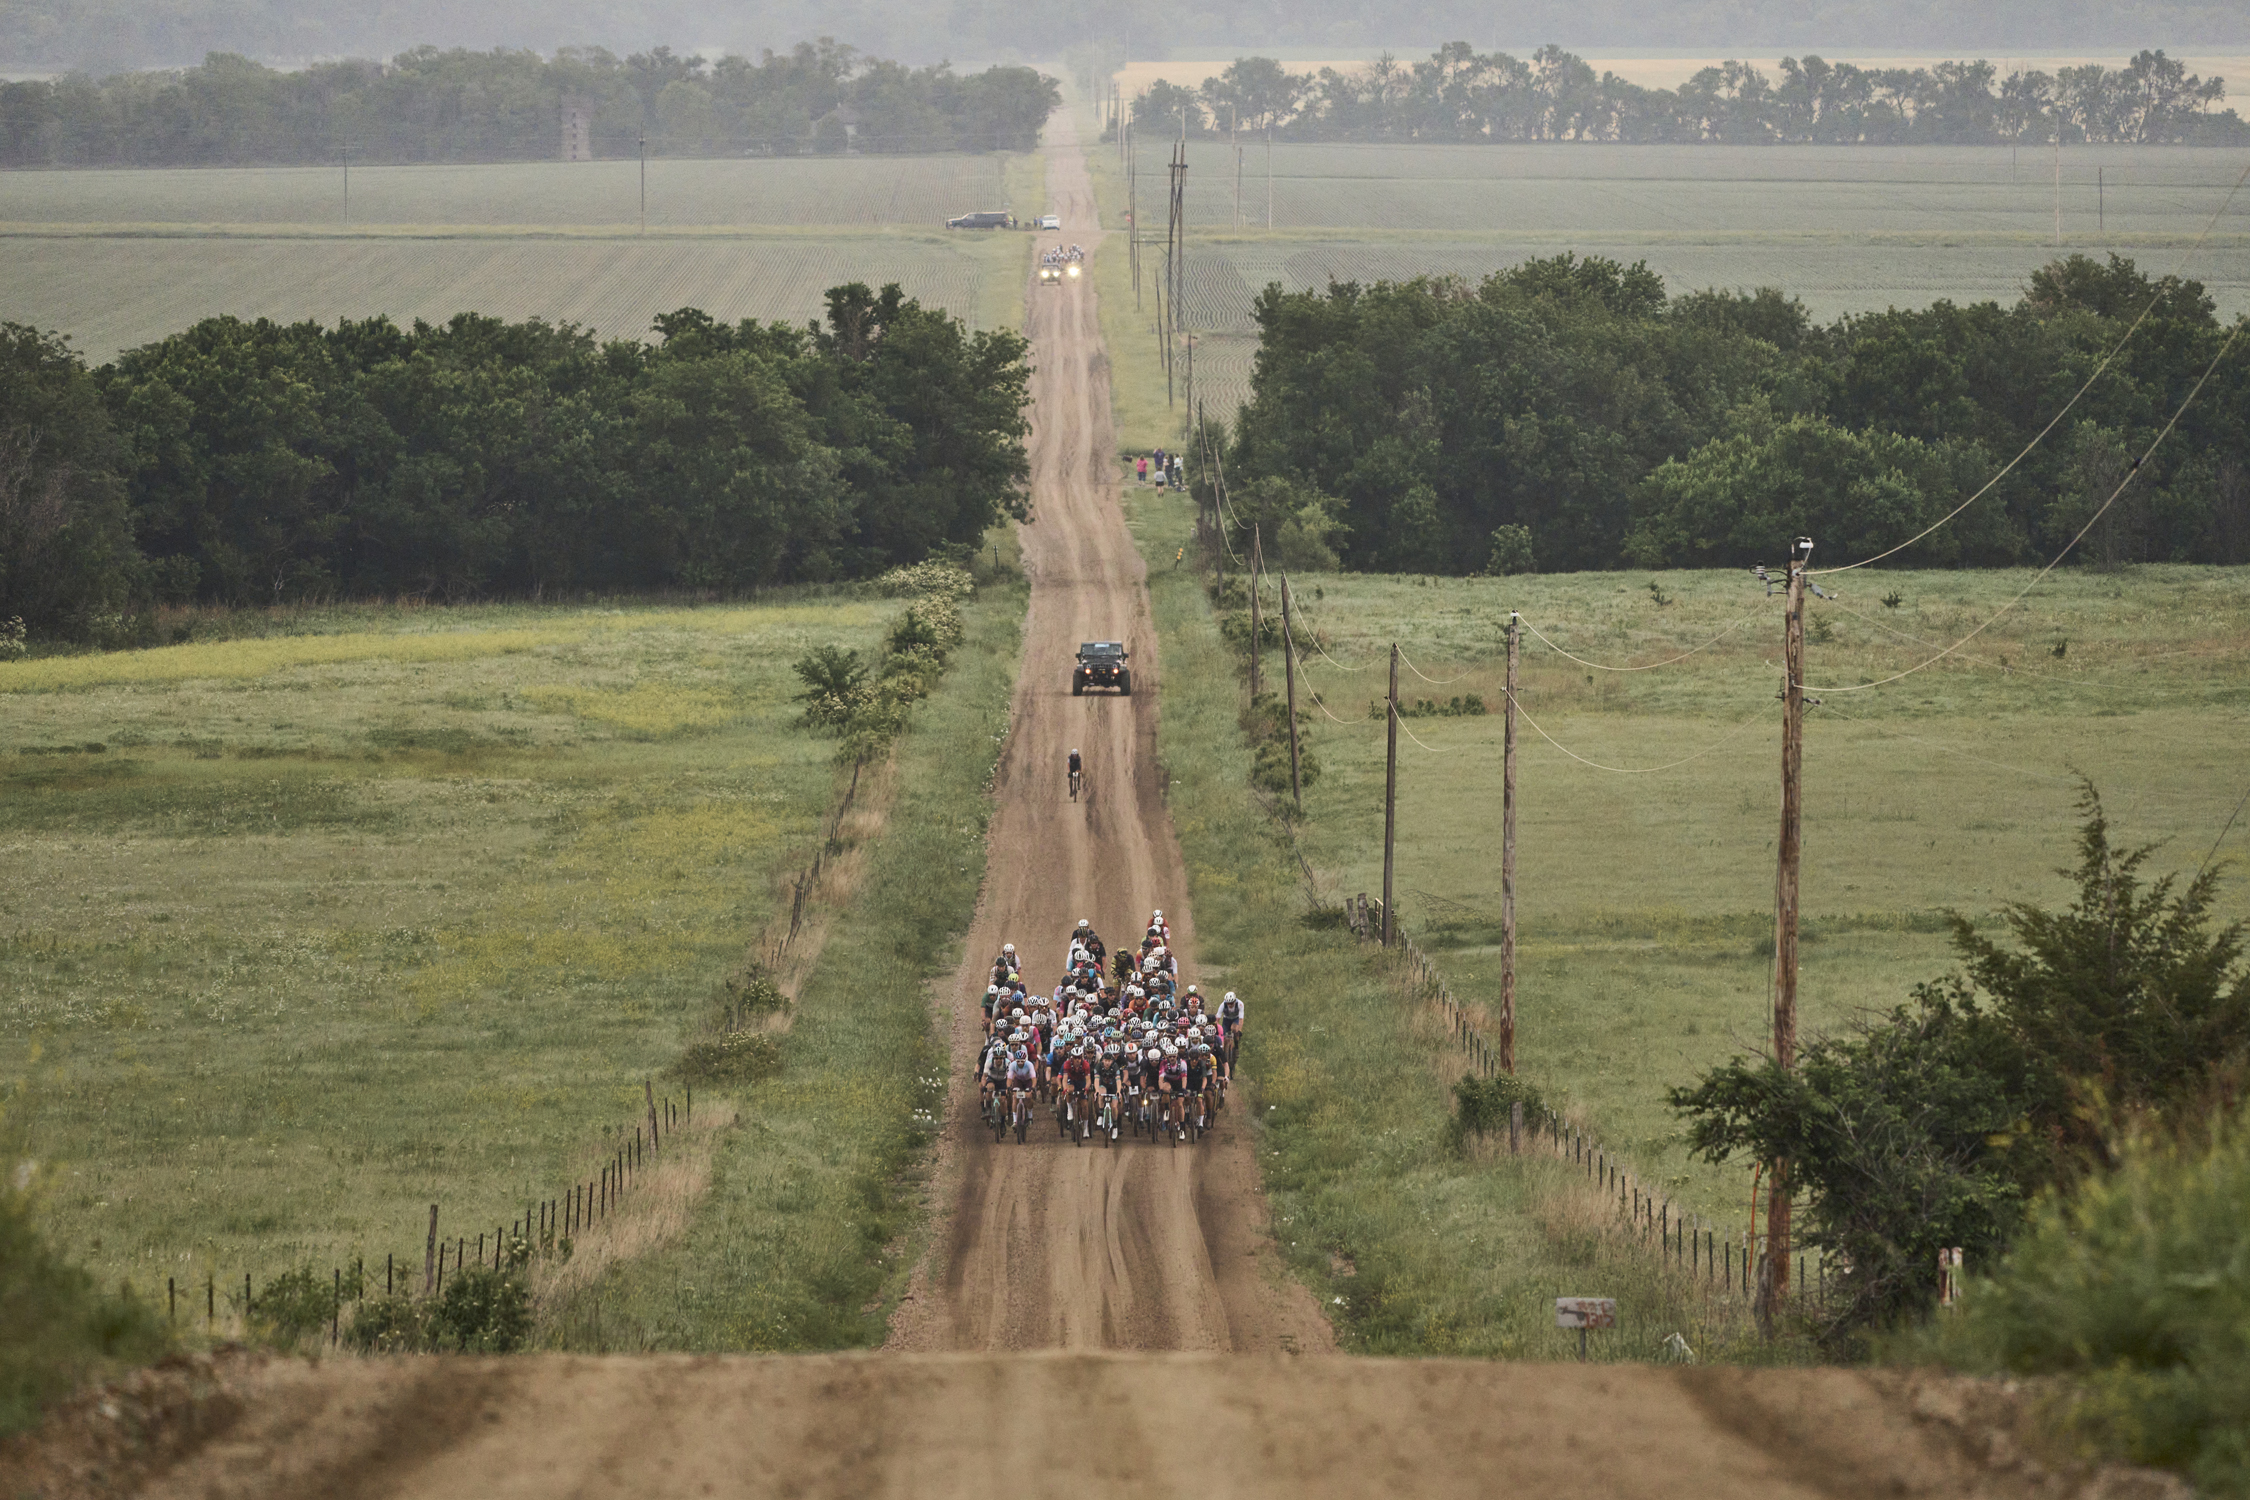  flint hills during the Unbound XL 350 mile gravel bike race